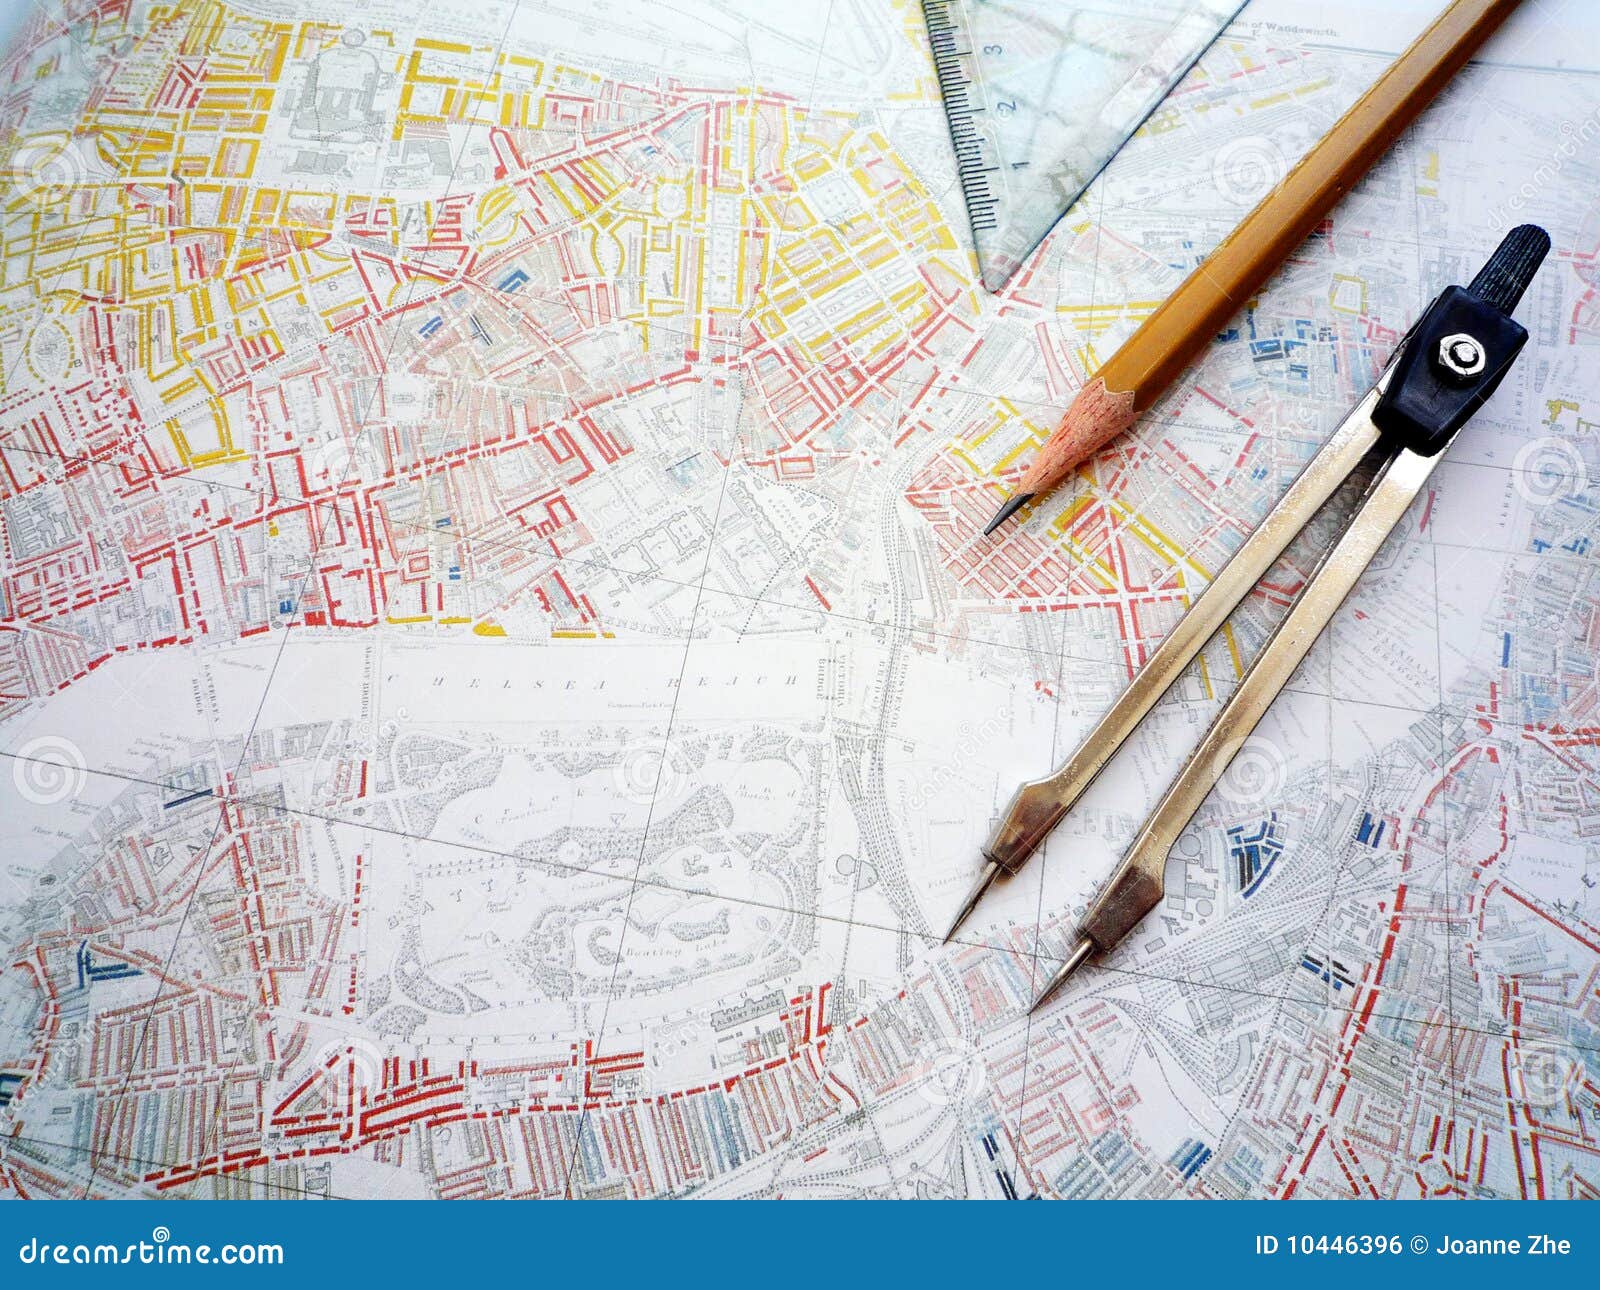 study of city planning map